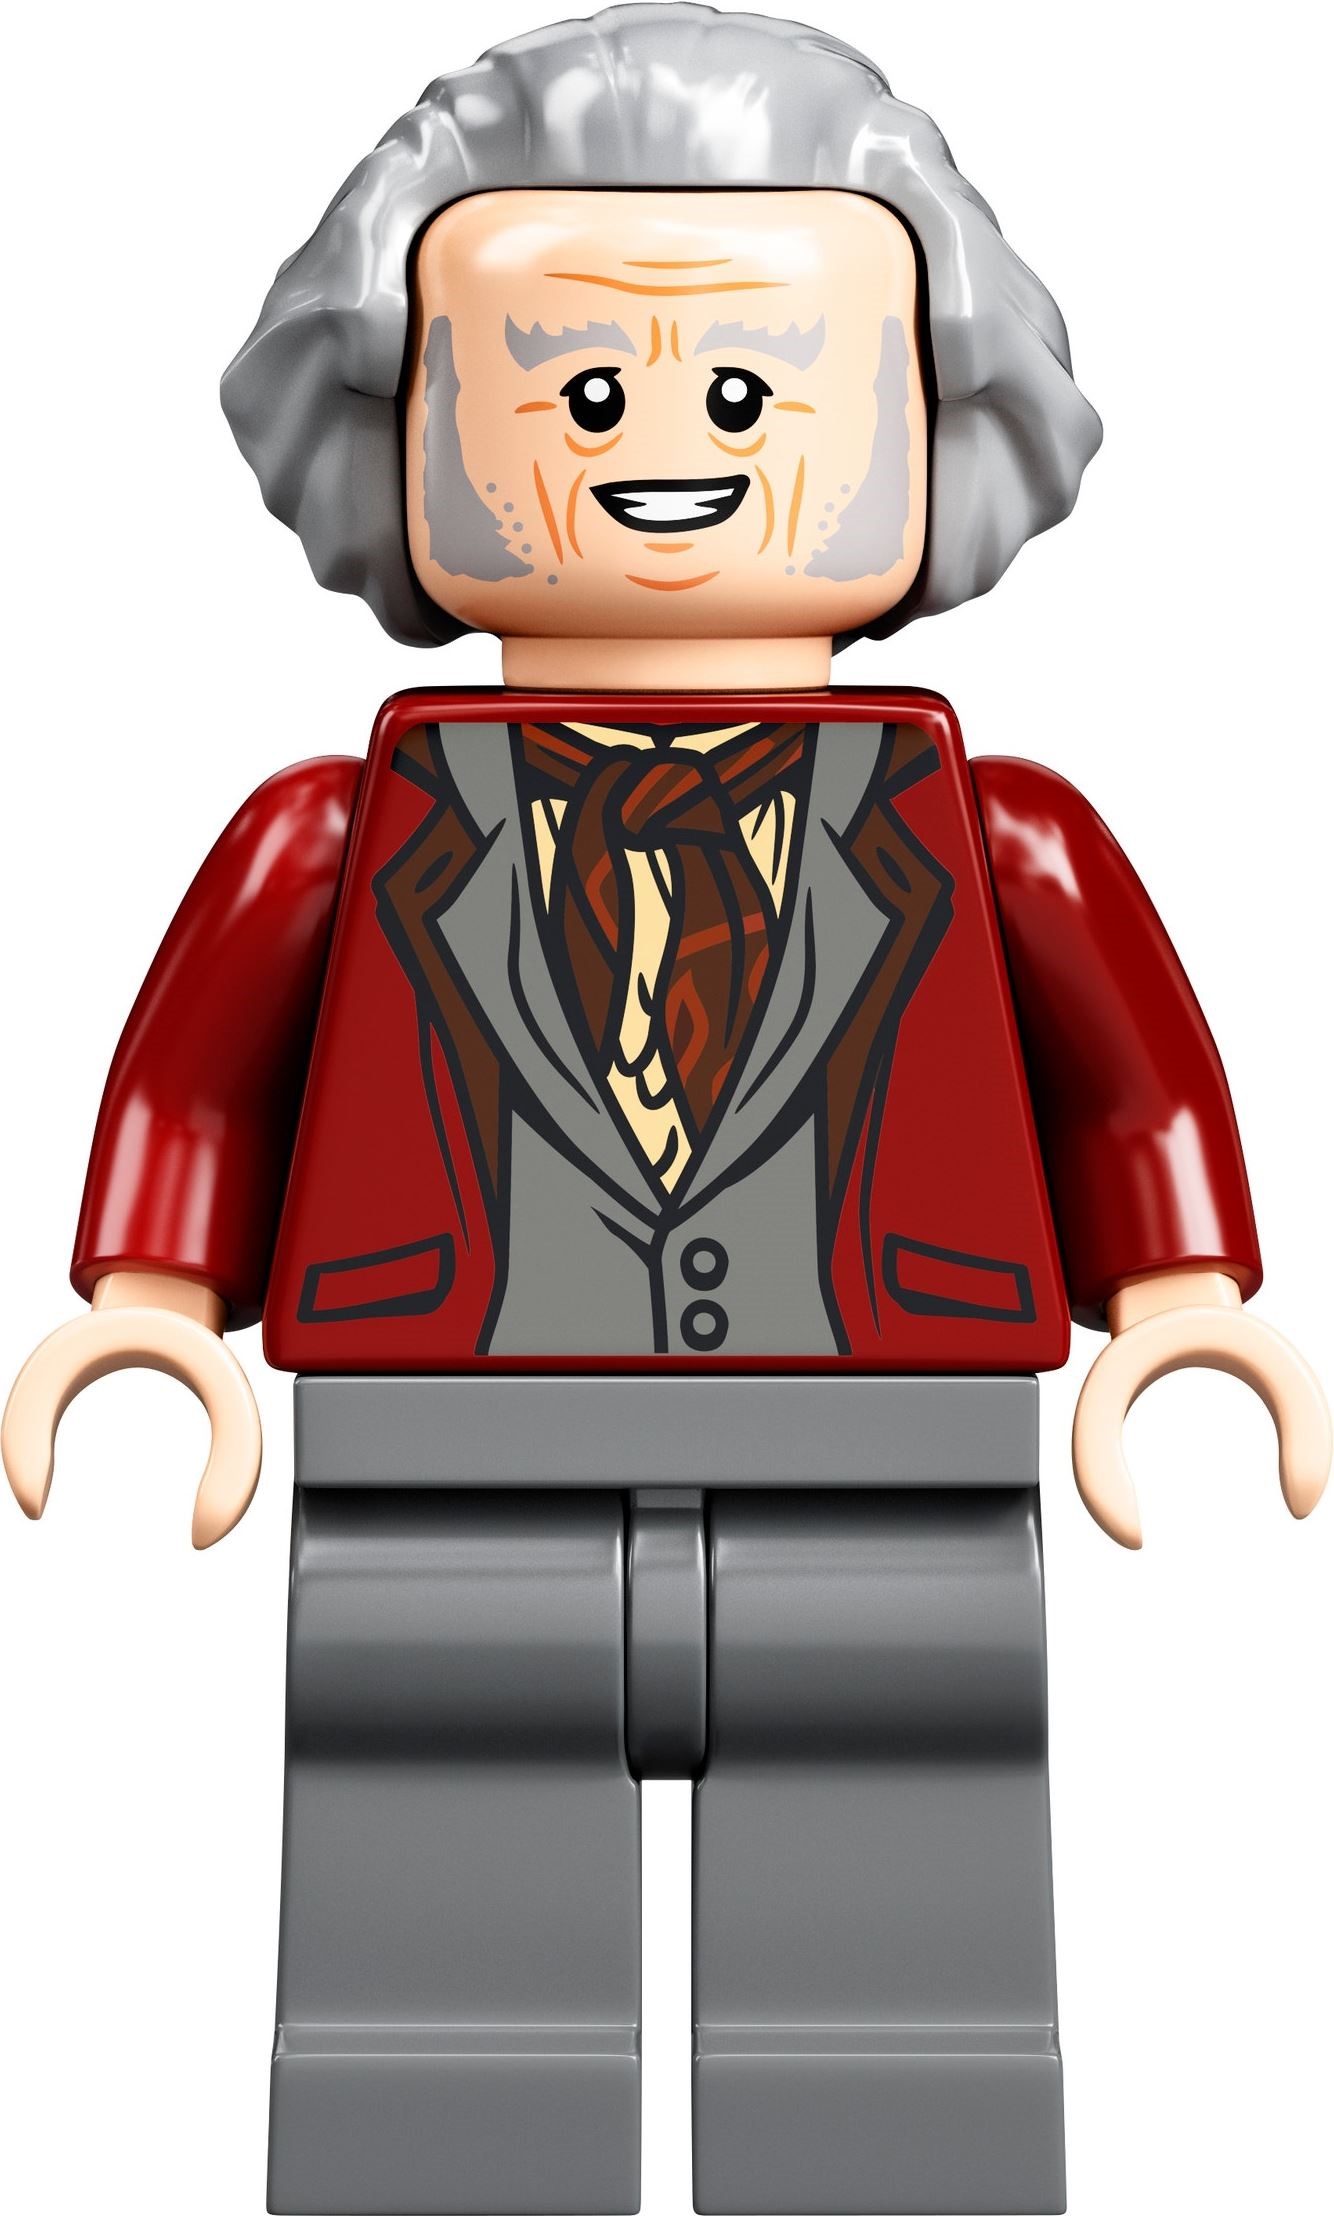 hp119 LEGO Garrick Ollivander Minifigure From Diagon Alley 10217 Harry Potter 